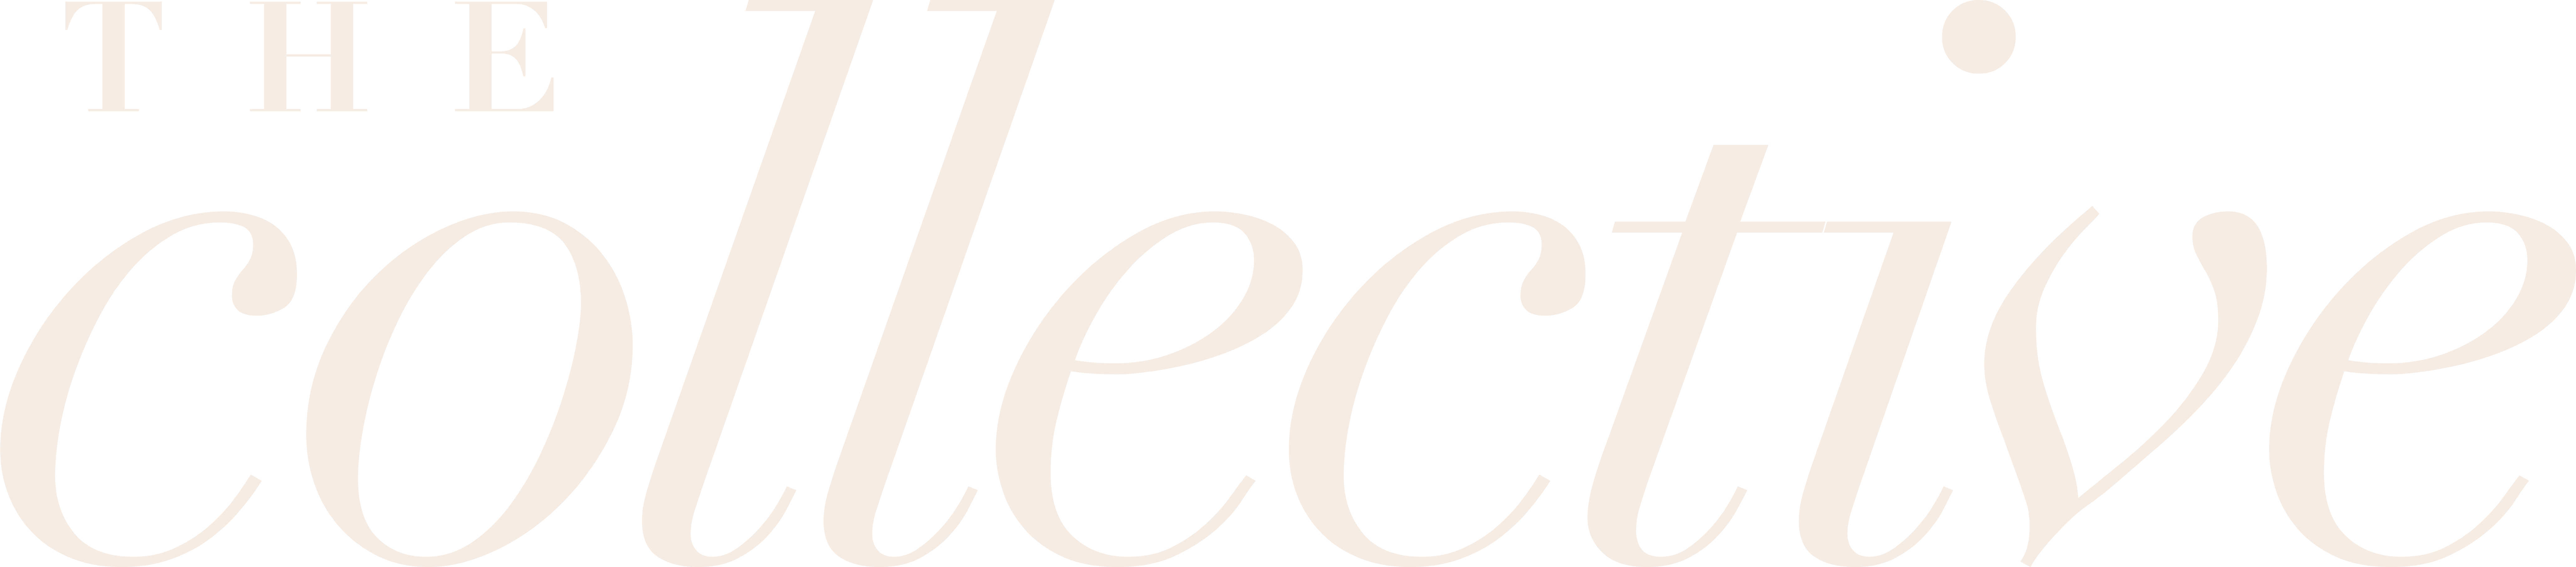 TC Logo large 01@3x